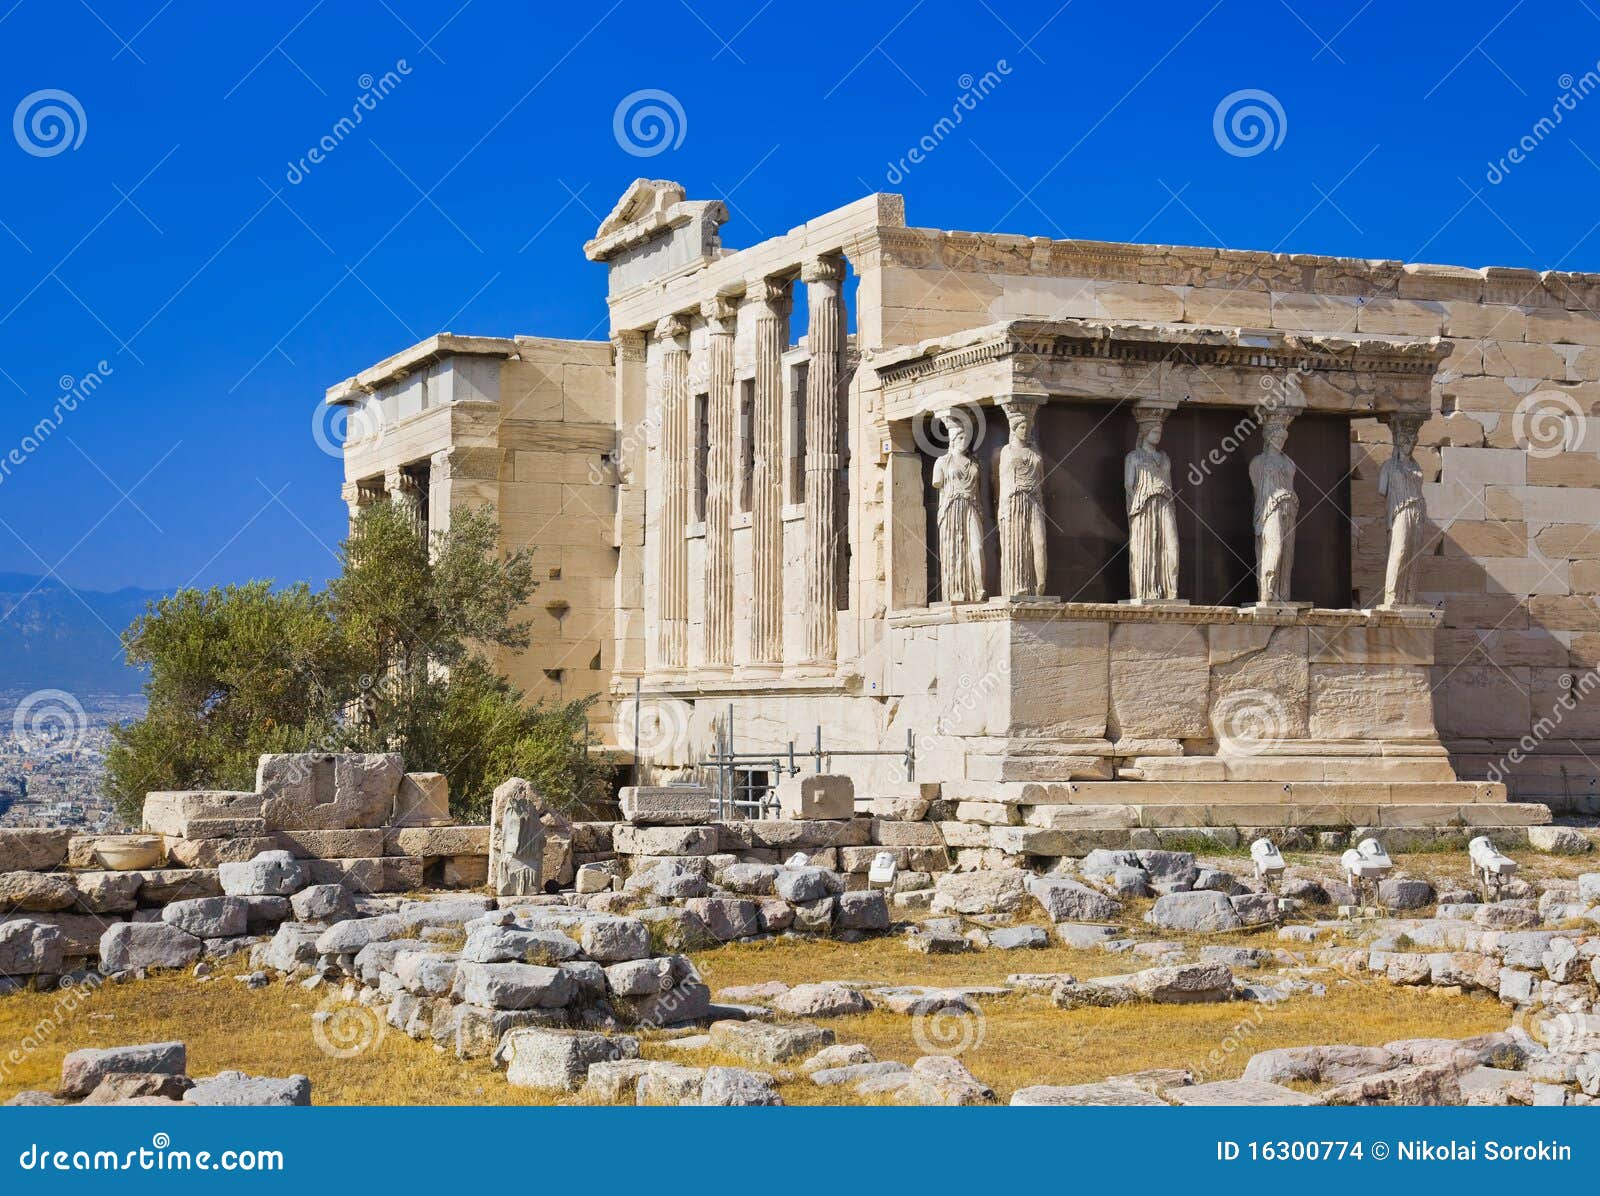 erechtheum temple in acropolis at athens, greece